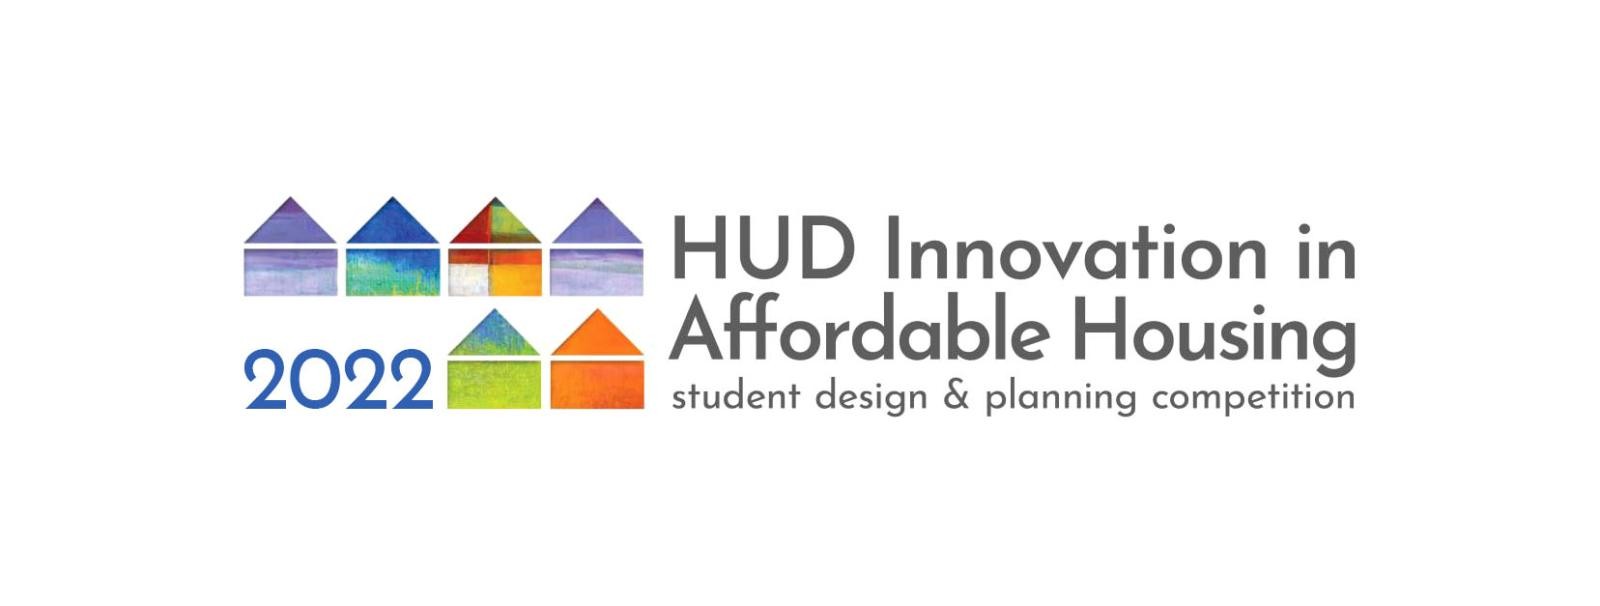 HUD 2022 logo